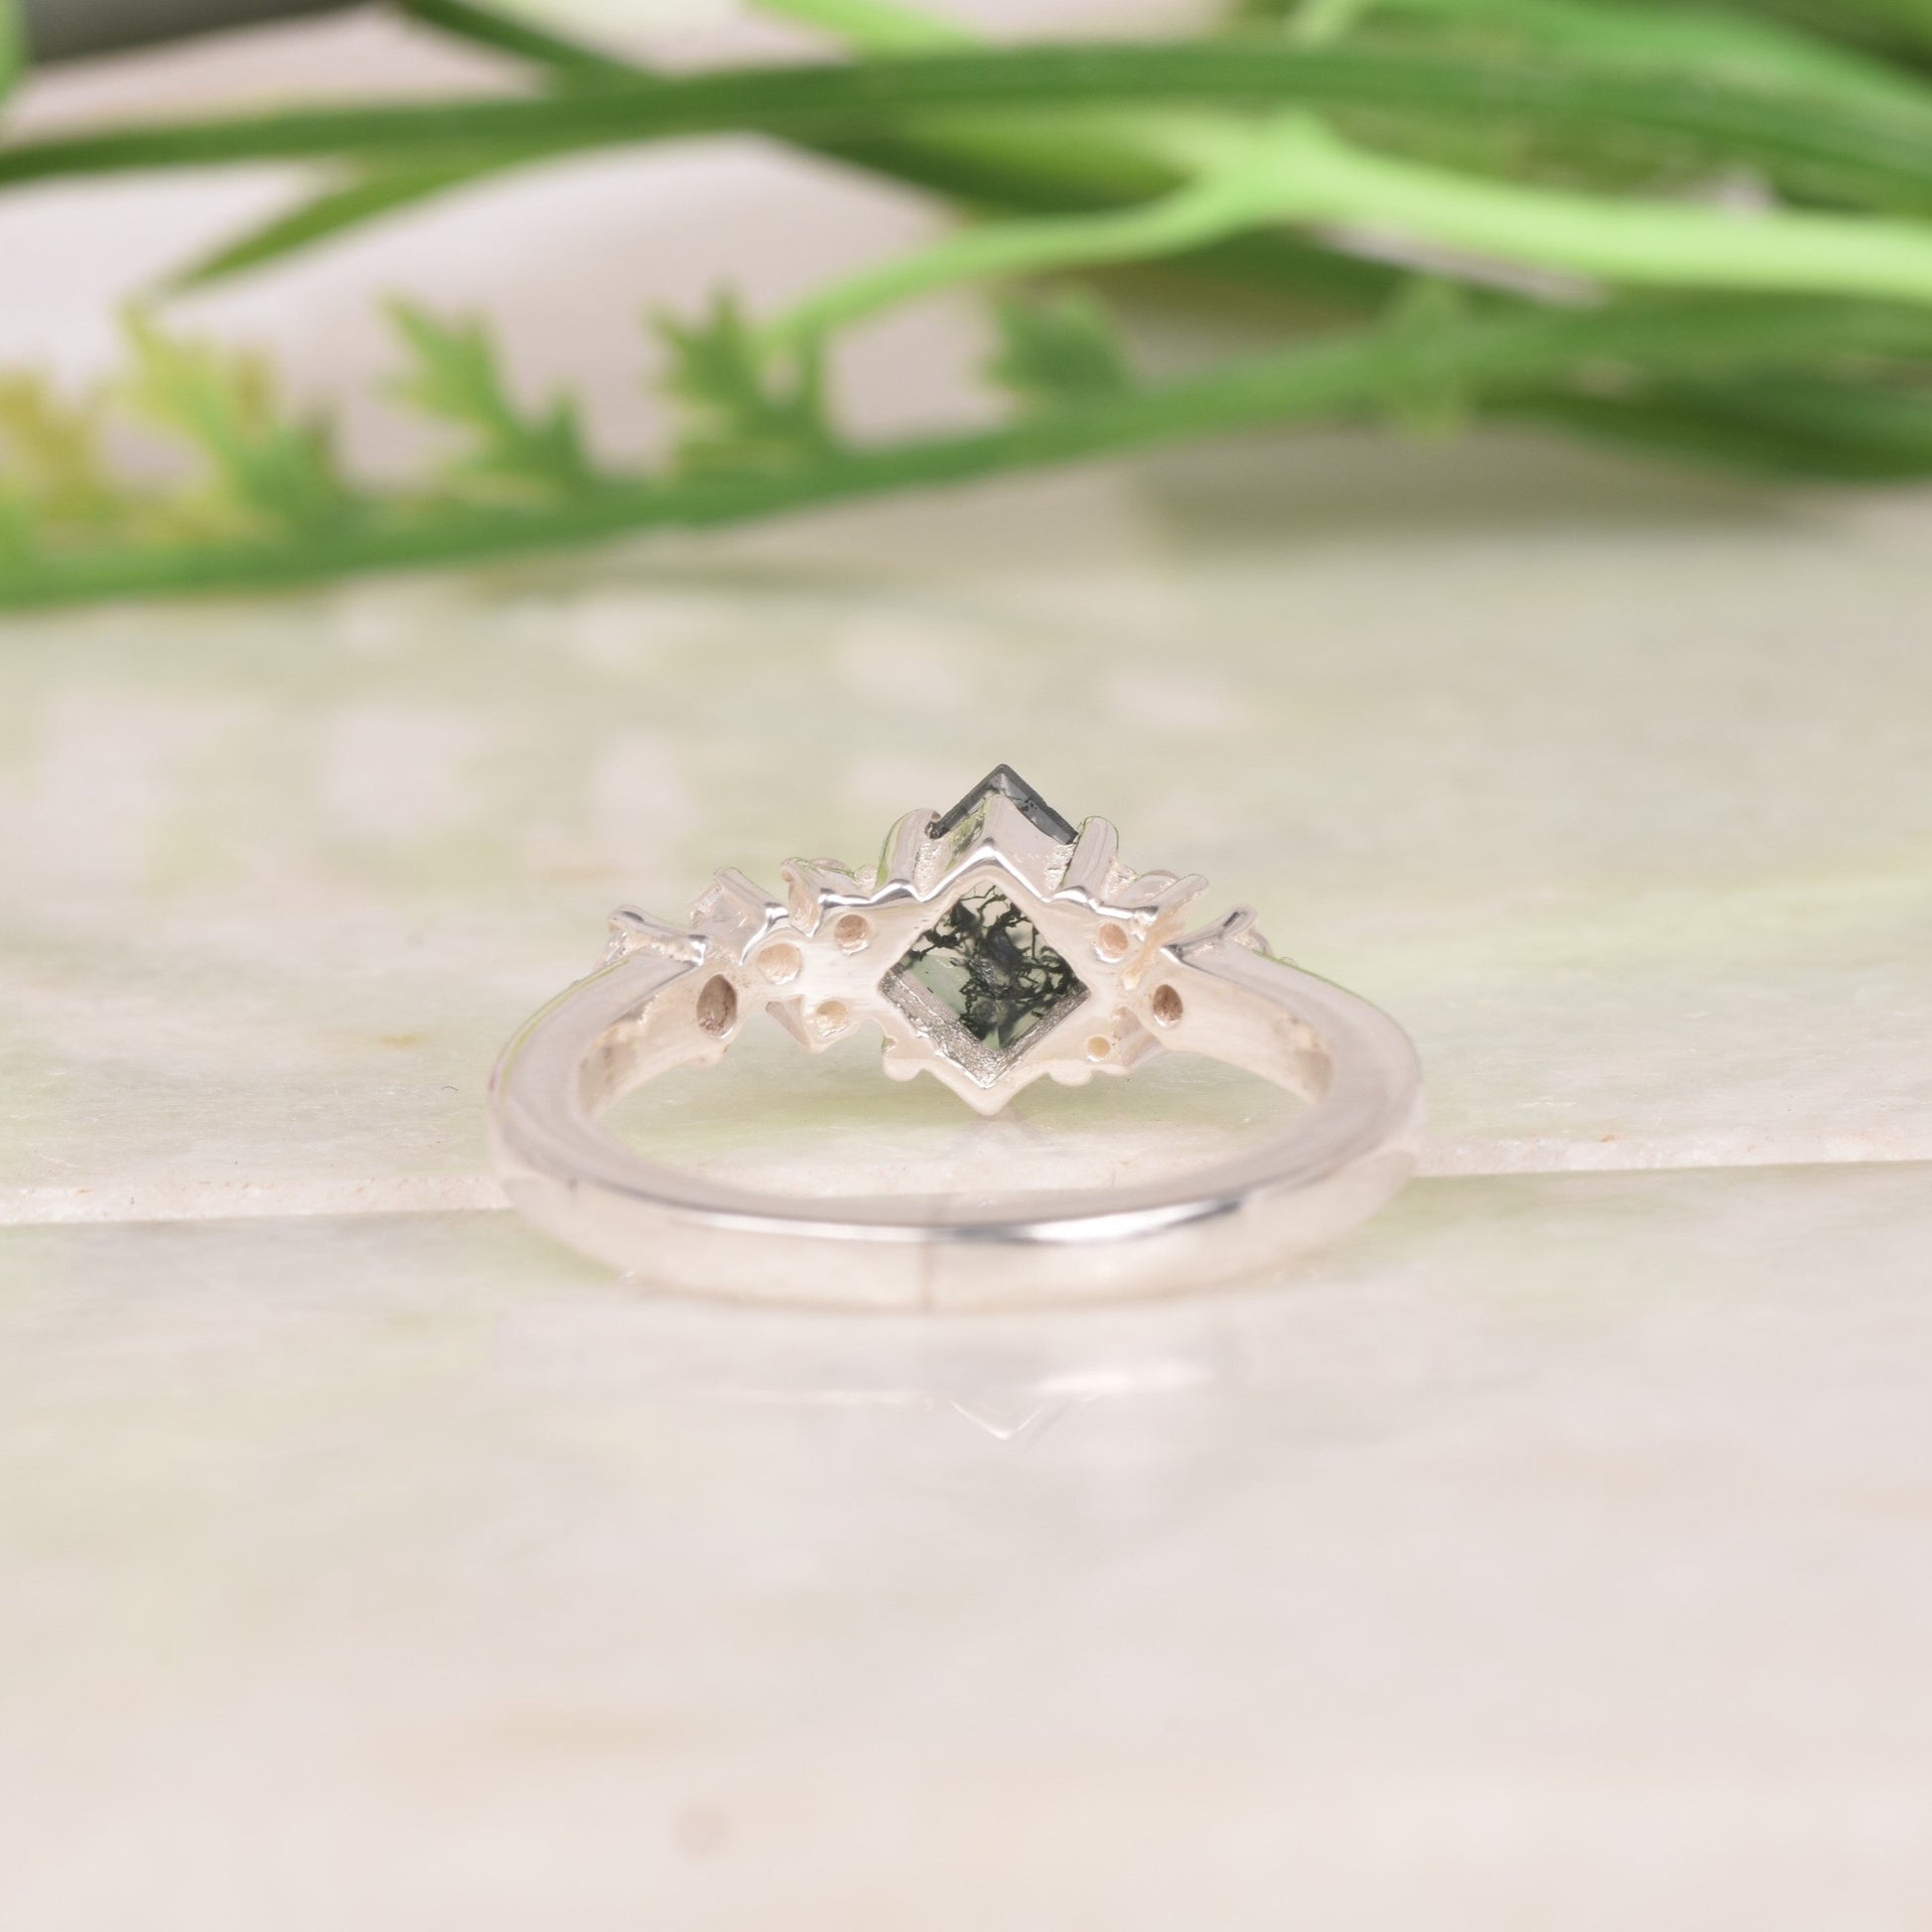 Buy Princess Cut Black Rutile Quartz Ring In 925 Sterling Silver